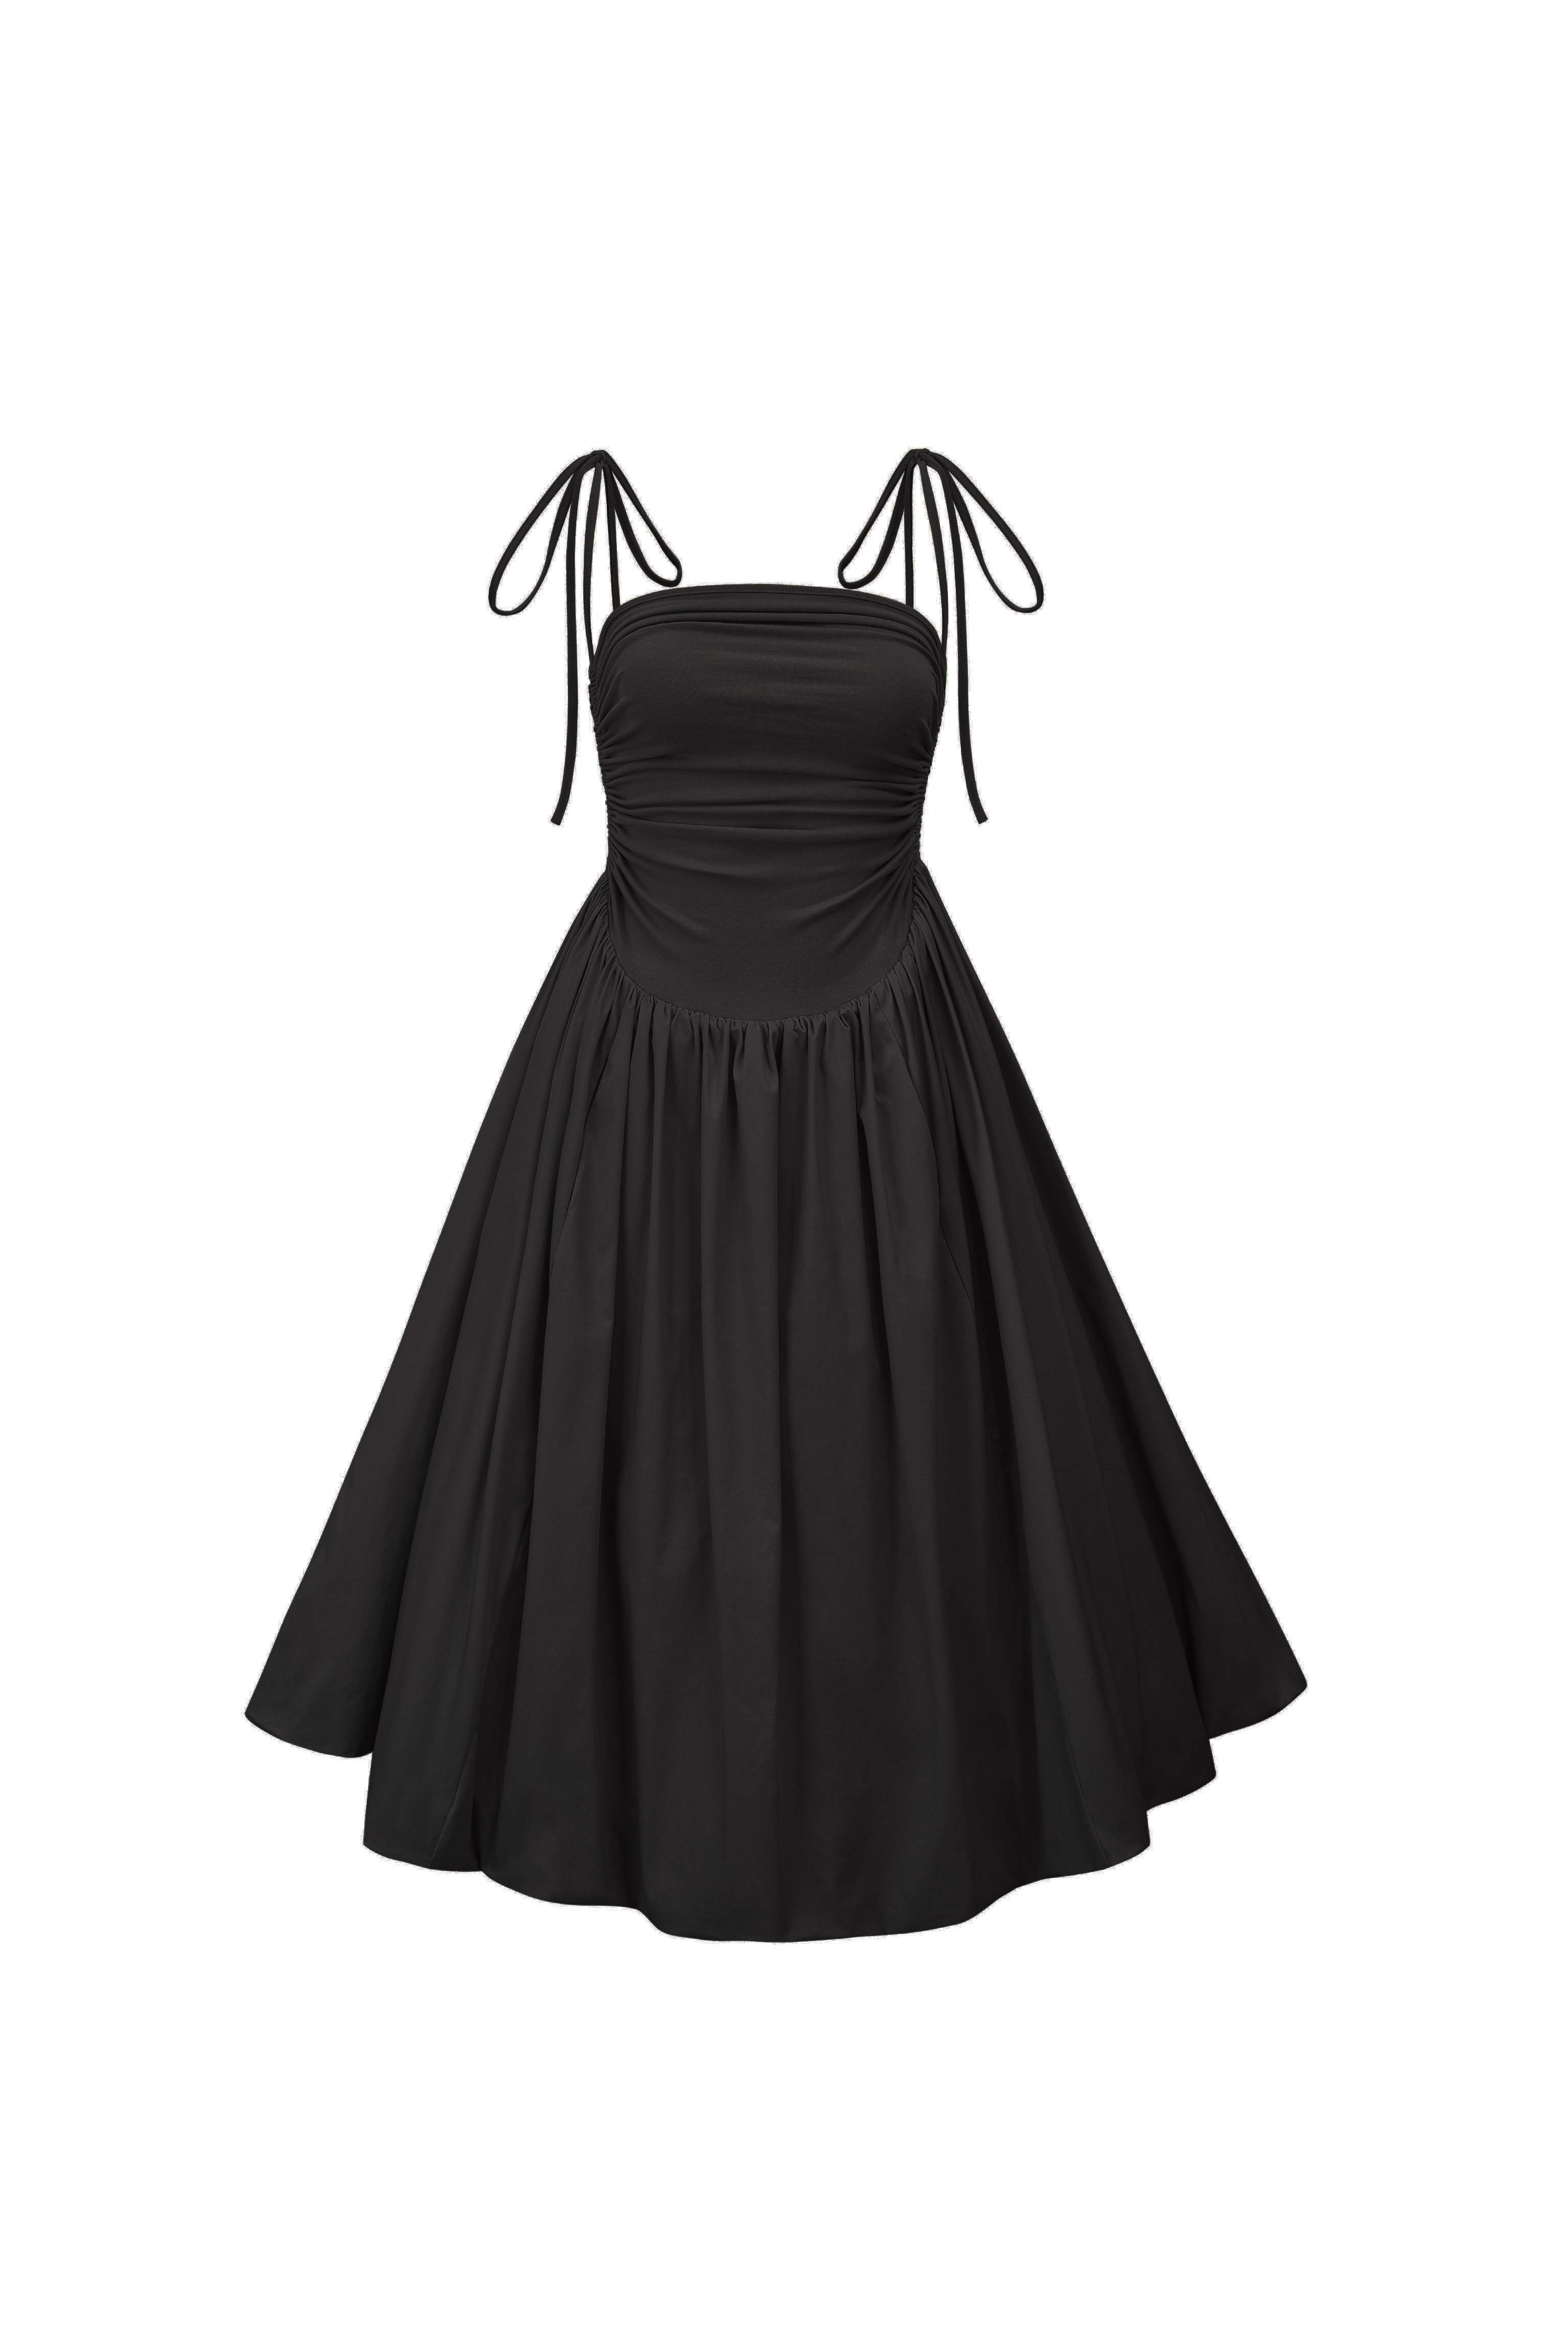 Alexa Black Puffball Cotton Midi DressAlexa Black Summer Cotton Puffball Fit and Flare Midi Dress